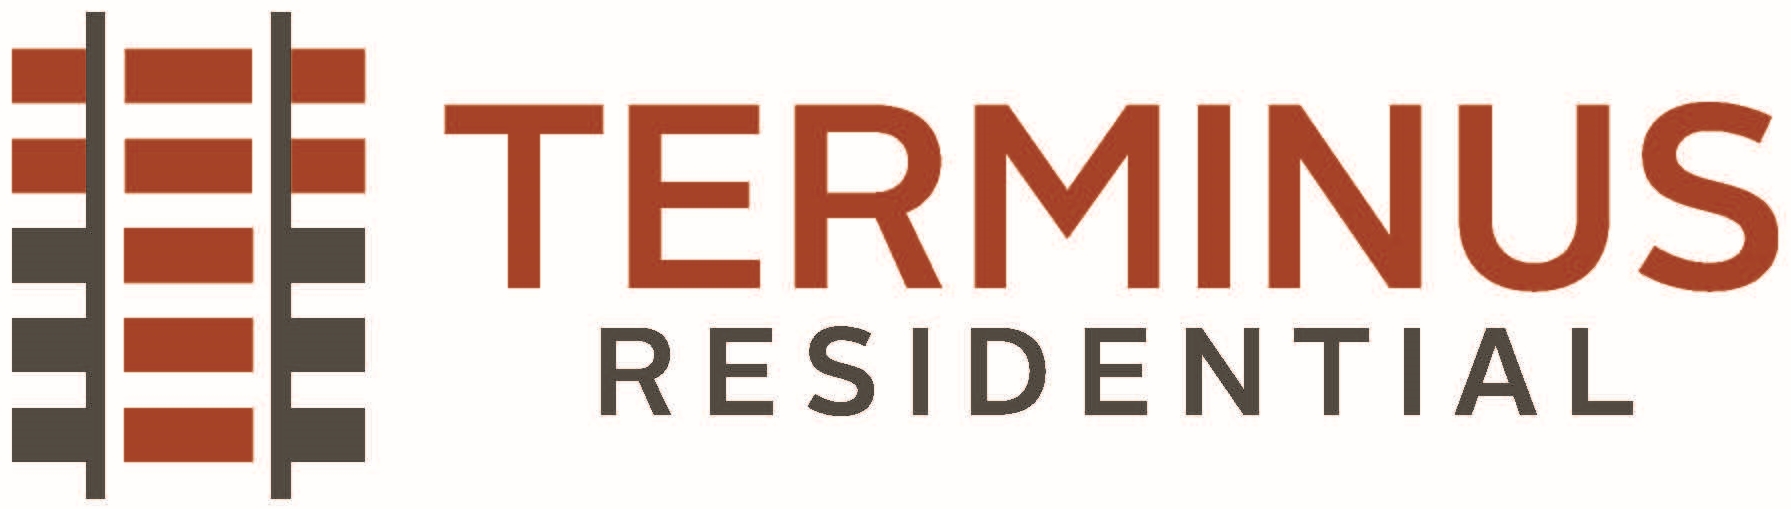 Terminus Residential logo